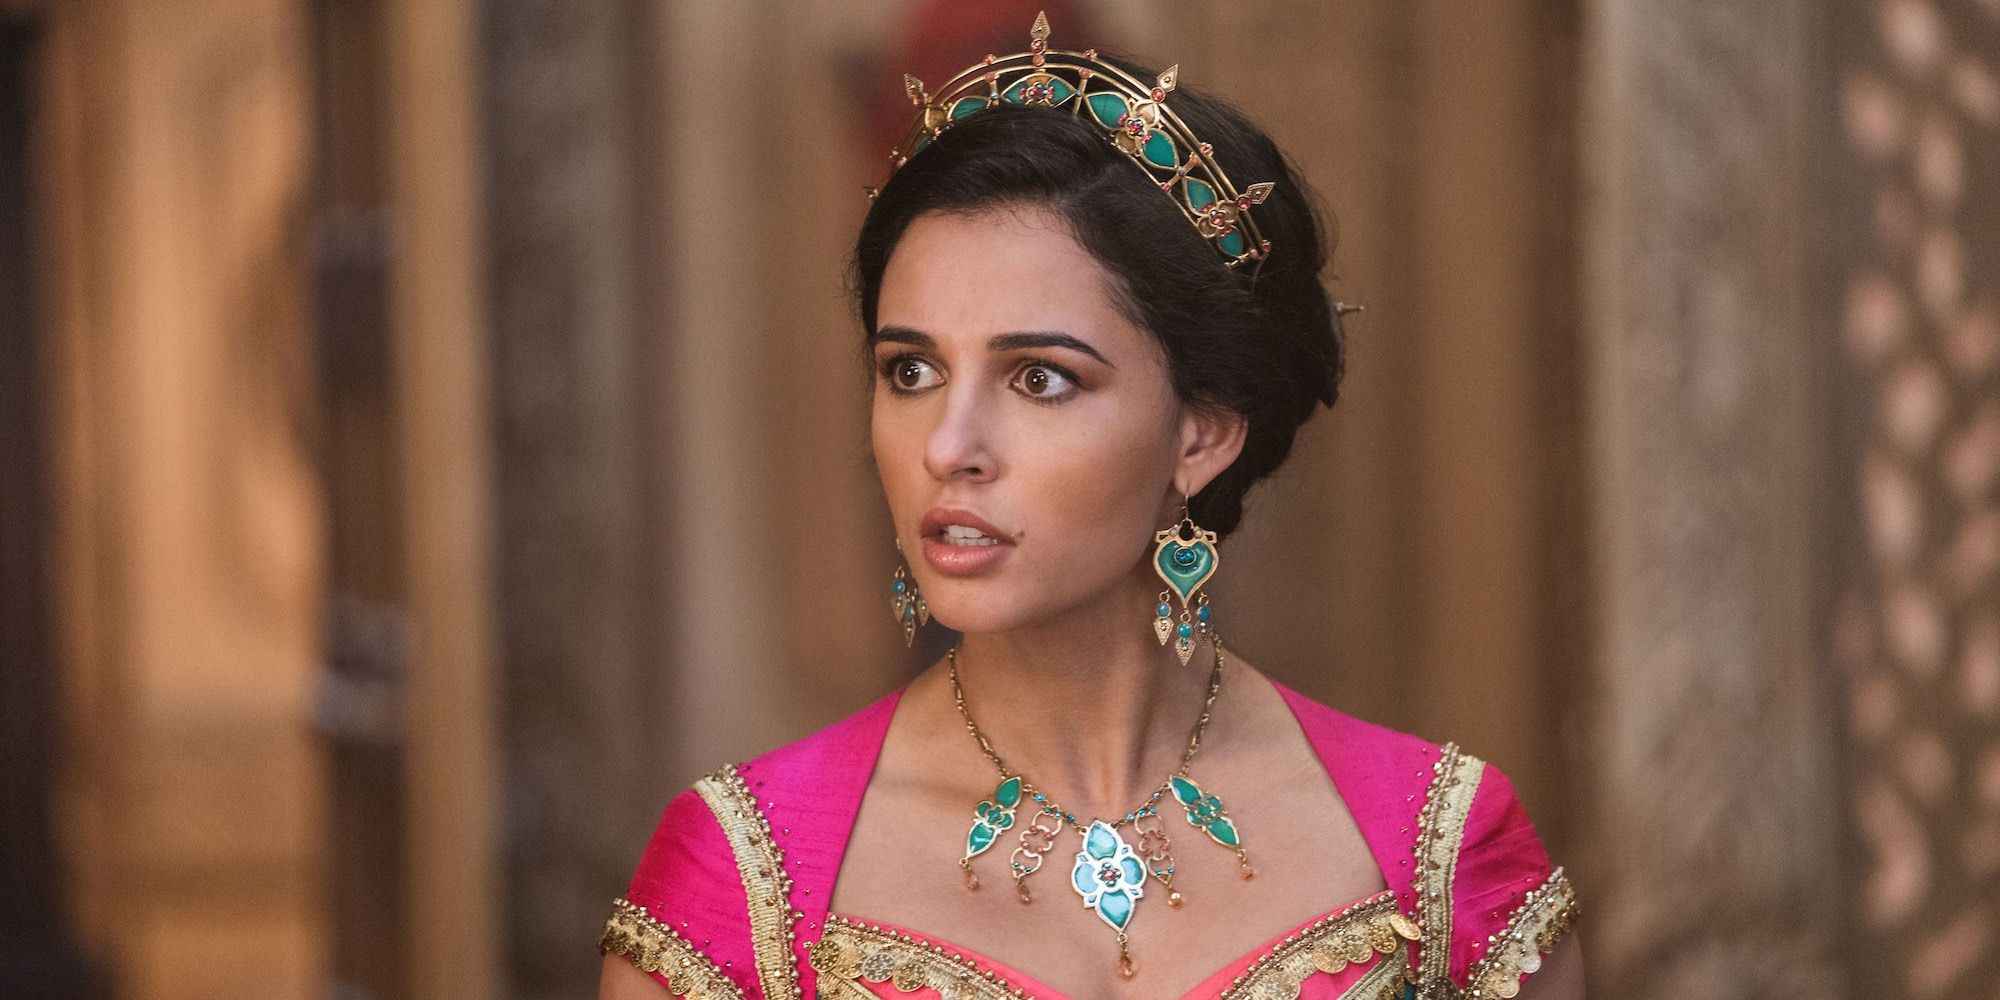 Jasmine in Aladdin 2019 looking frustrated